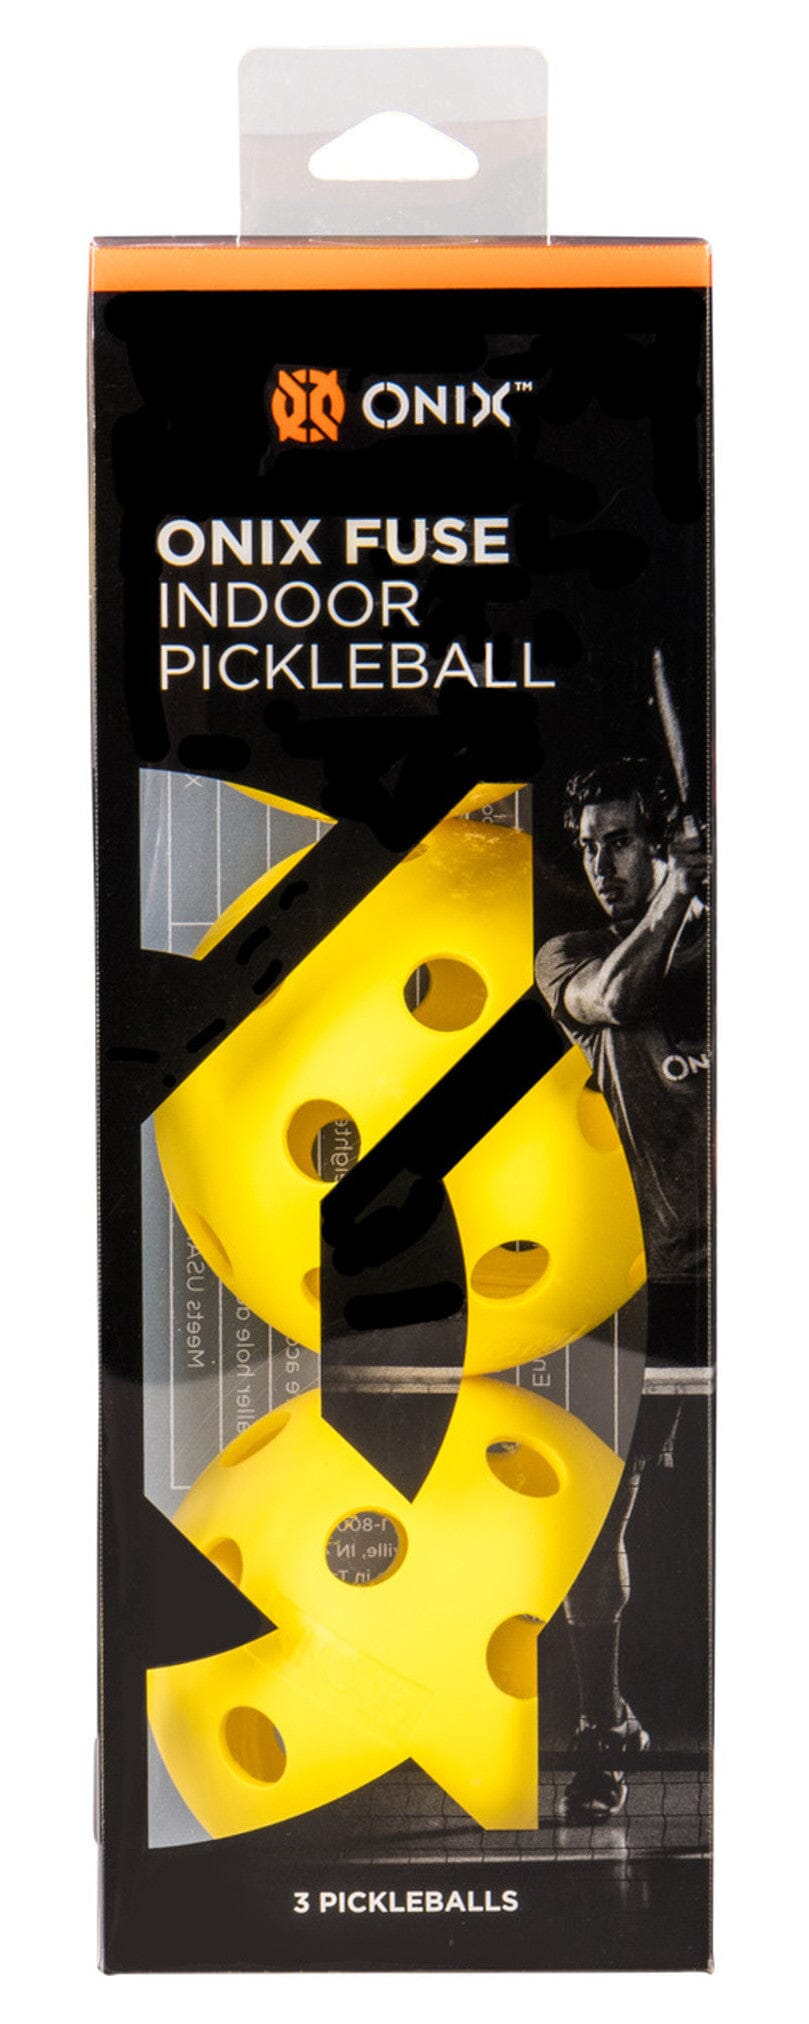 Onix Fuse Pickleball Indoor Ball 3-pack Pickleball Balls Onix Yellow 